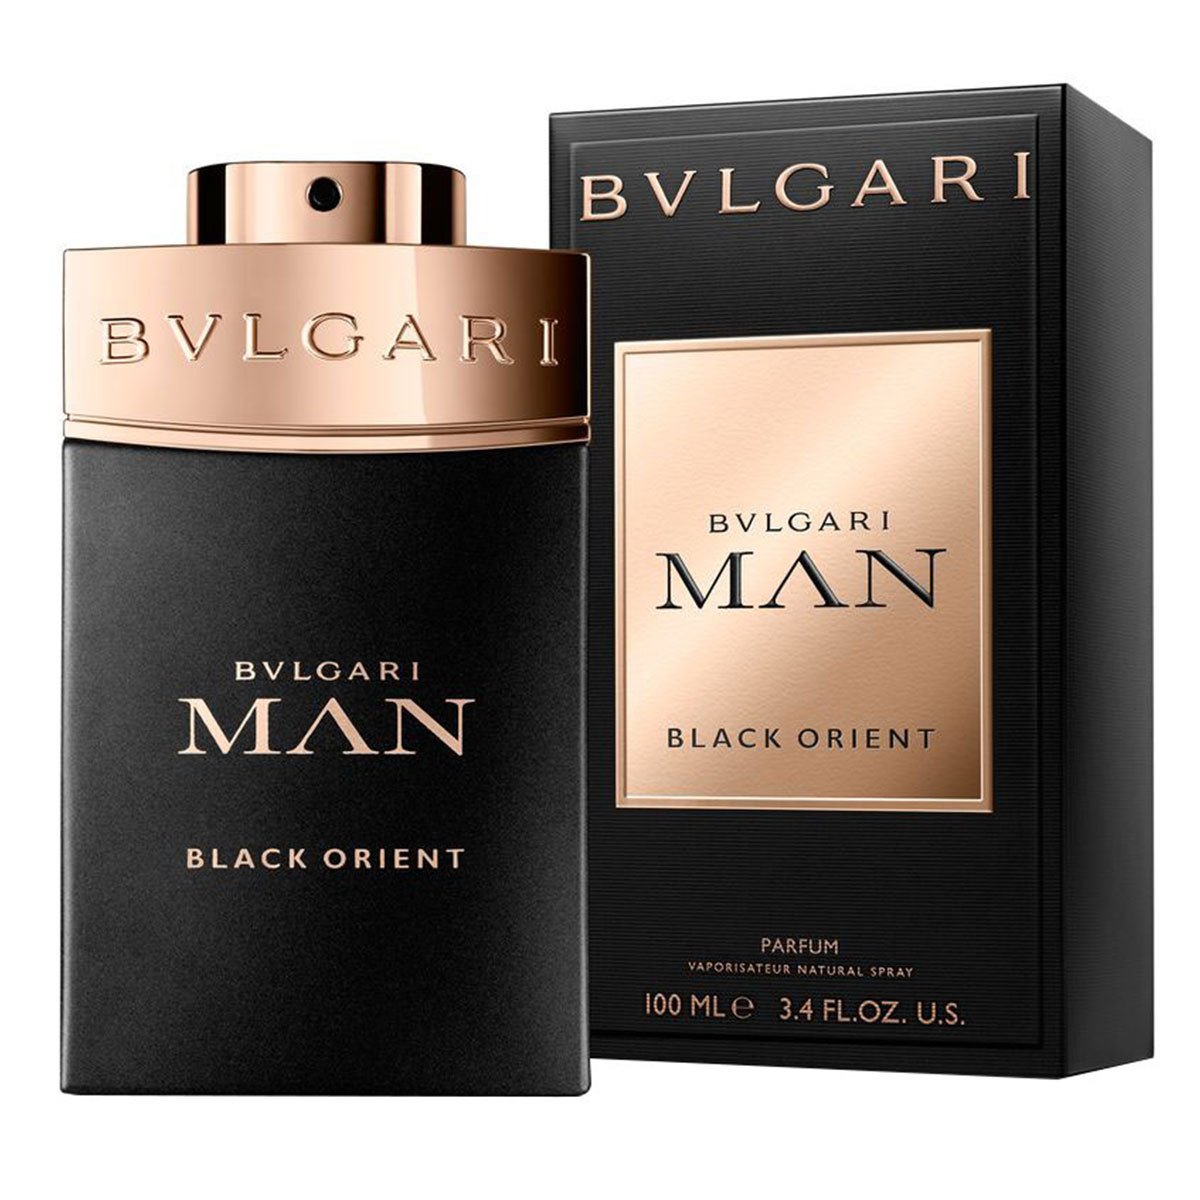 bvlgari man in black unboxing